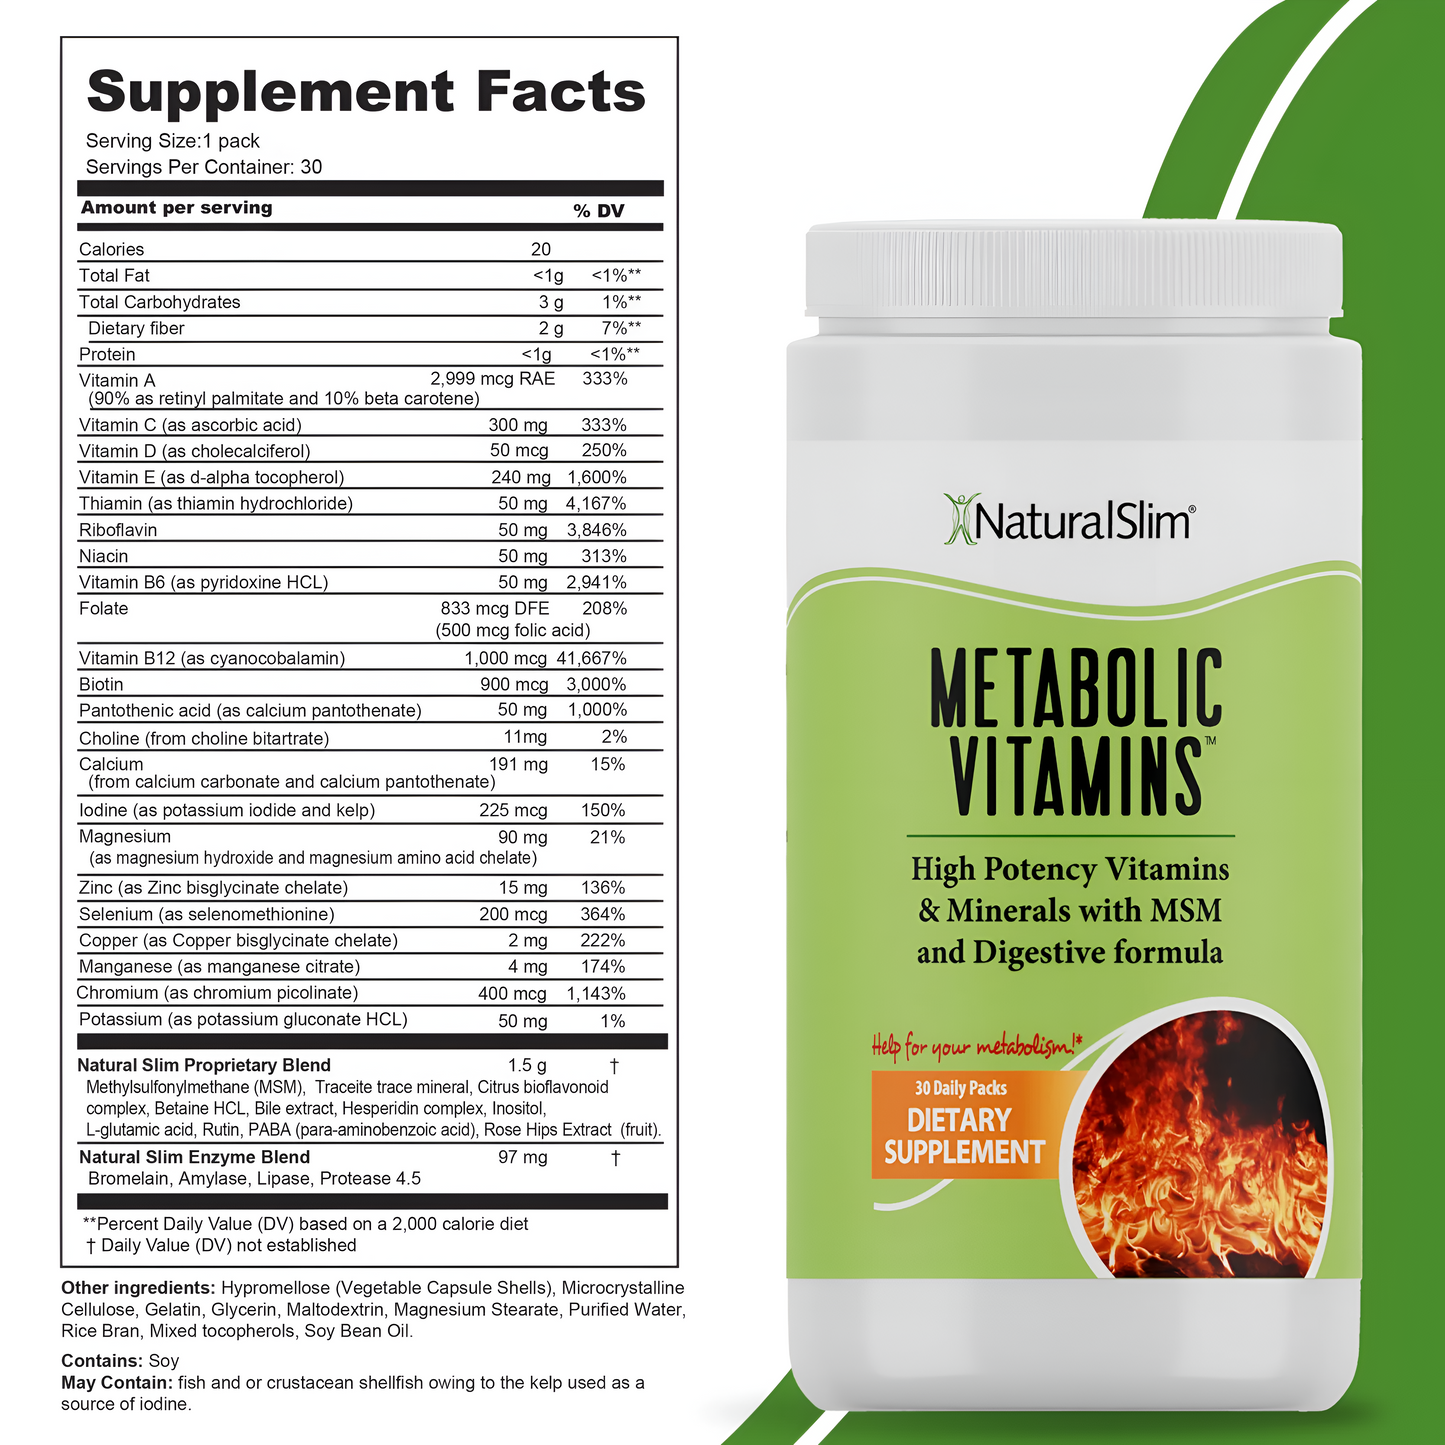 Metabolic Vitamins